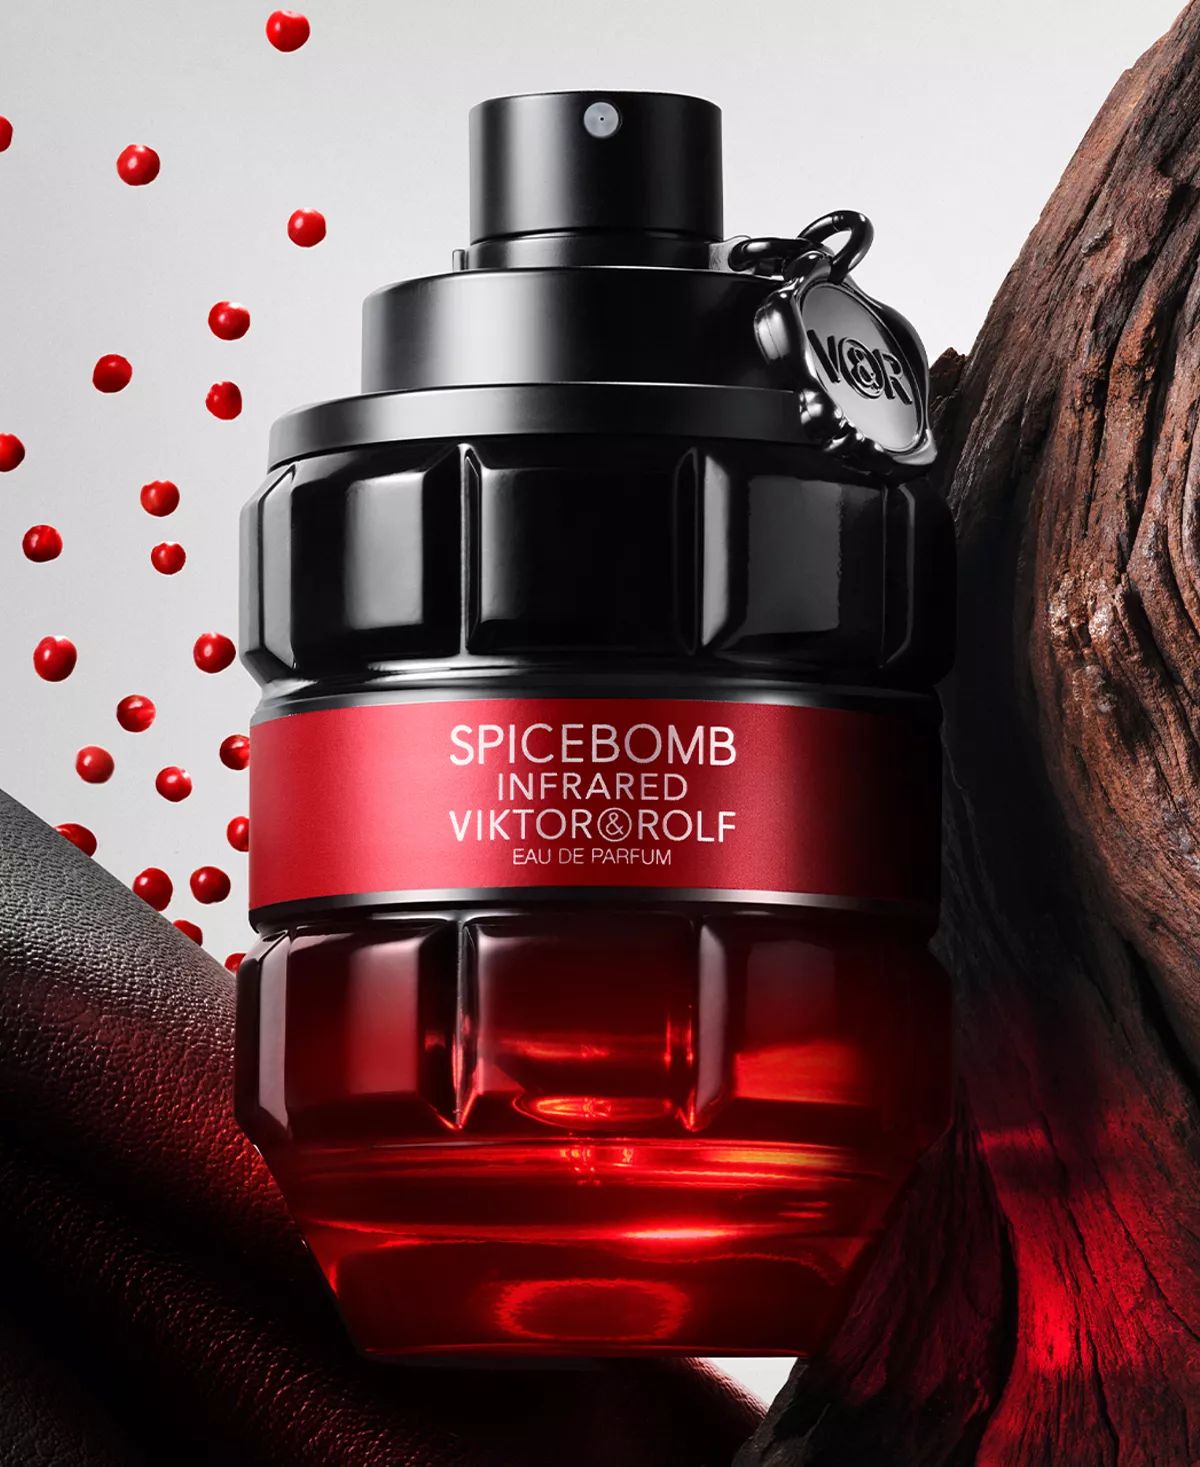 Spicebomb Infrared Eau de Parfum Viktor&Rolf cologne - a new fragrance ...